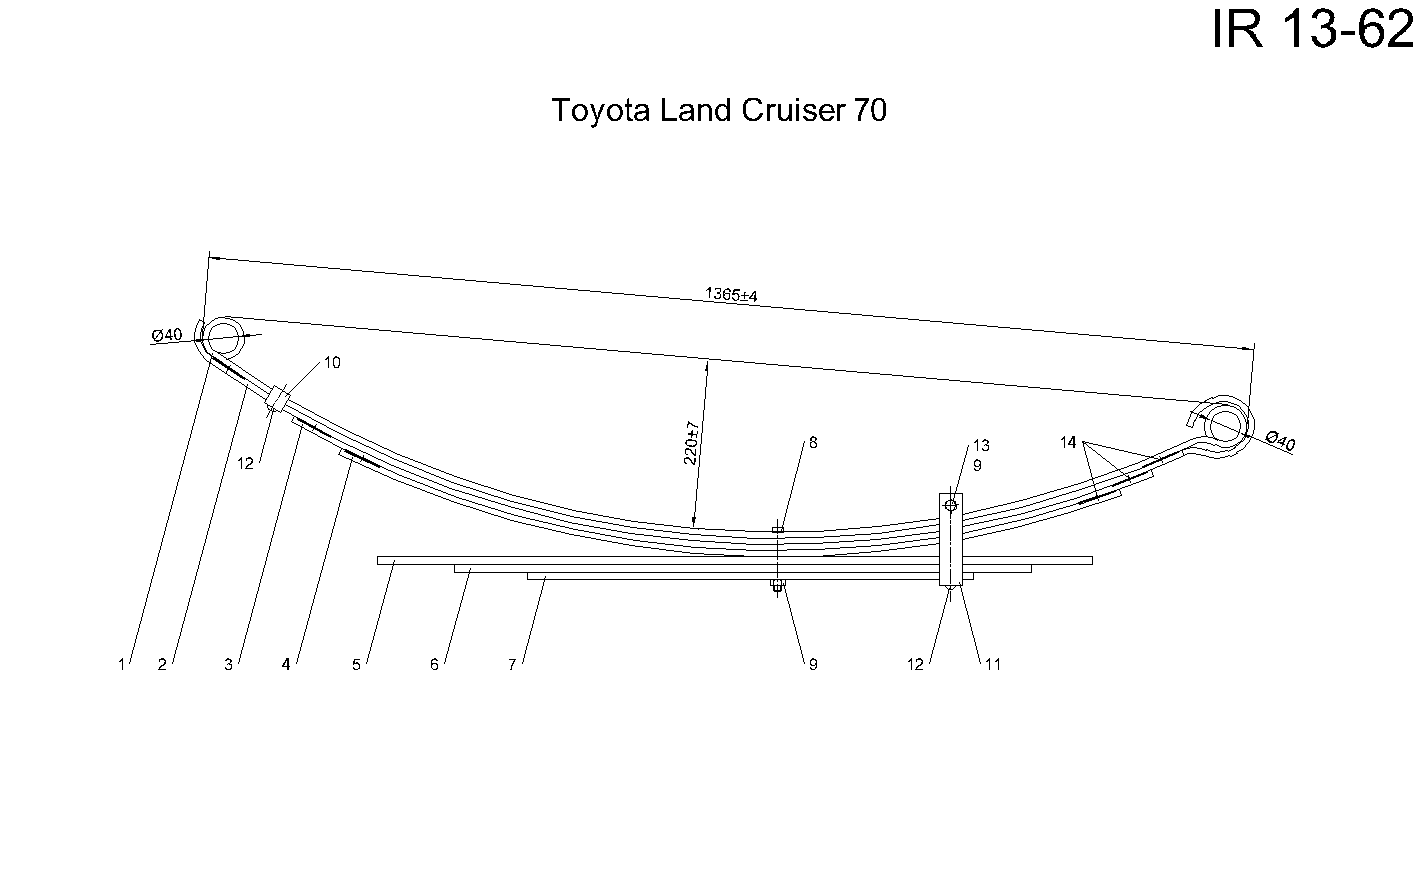 TOYOTA LAND CRUISER 70   (IR 13-62)
   .,